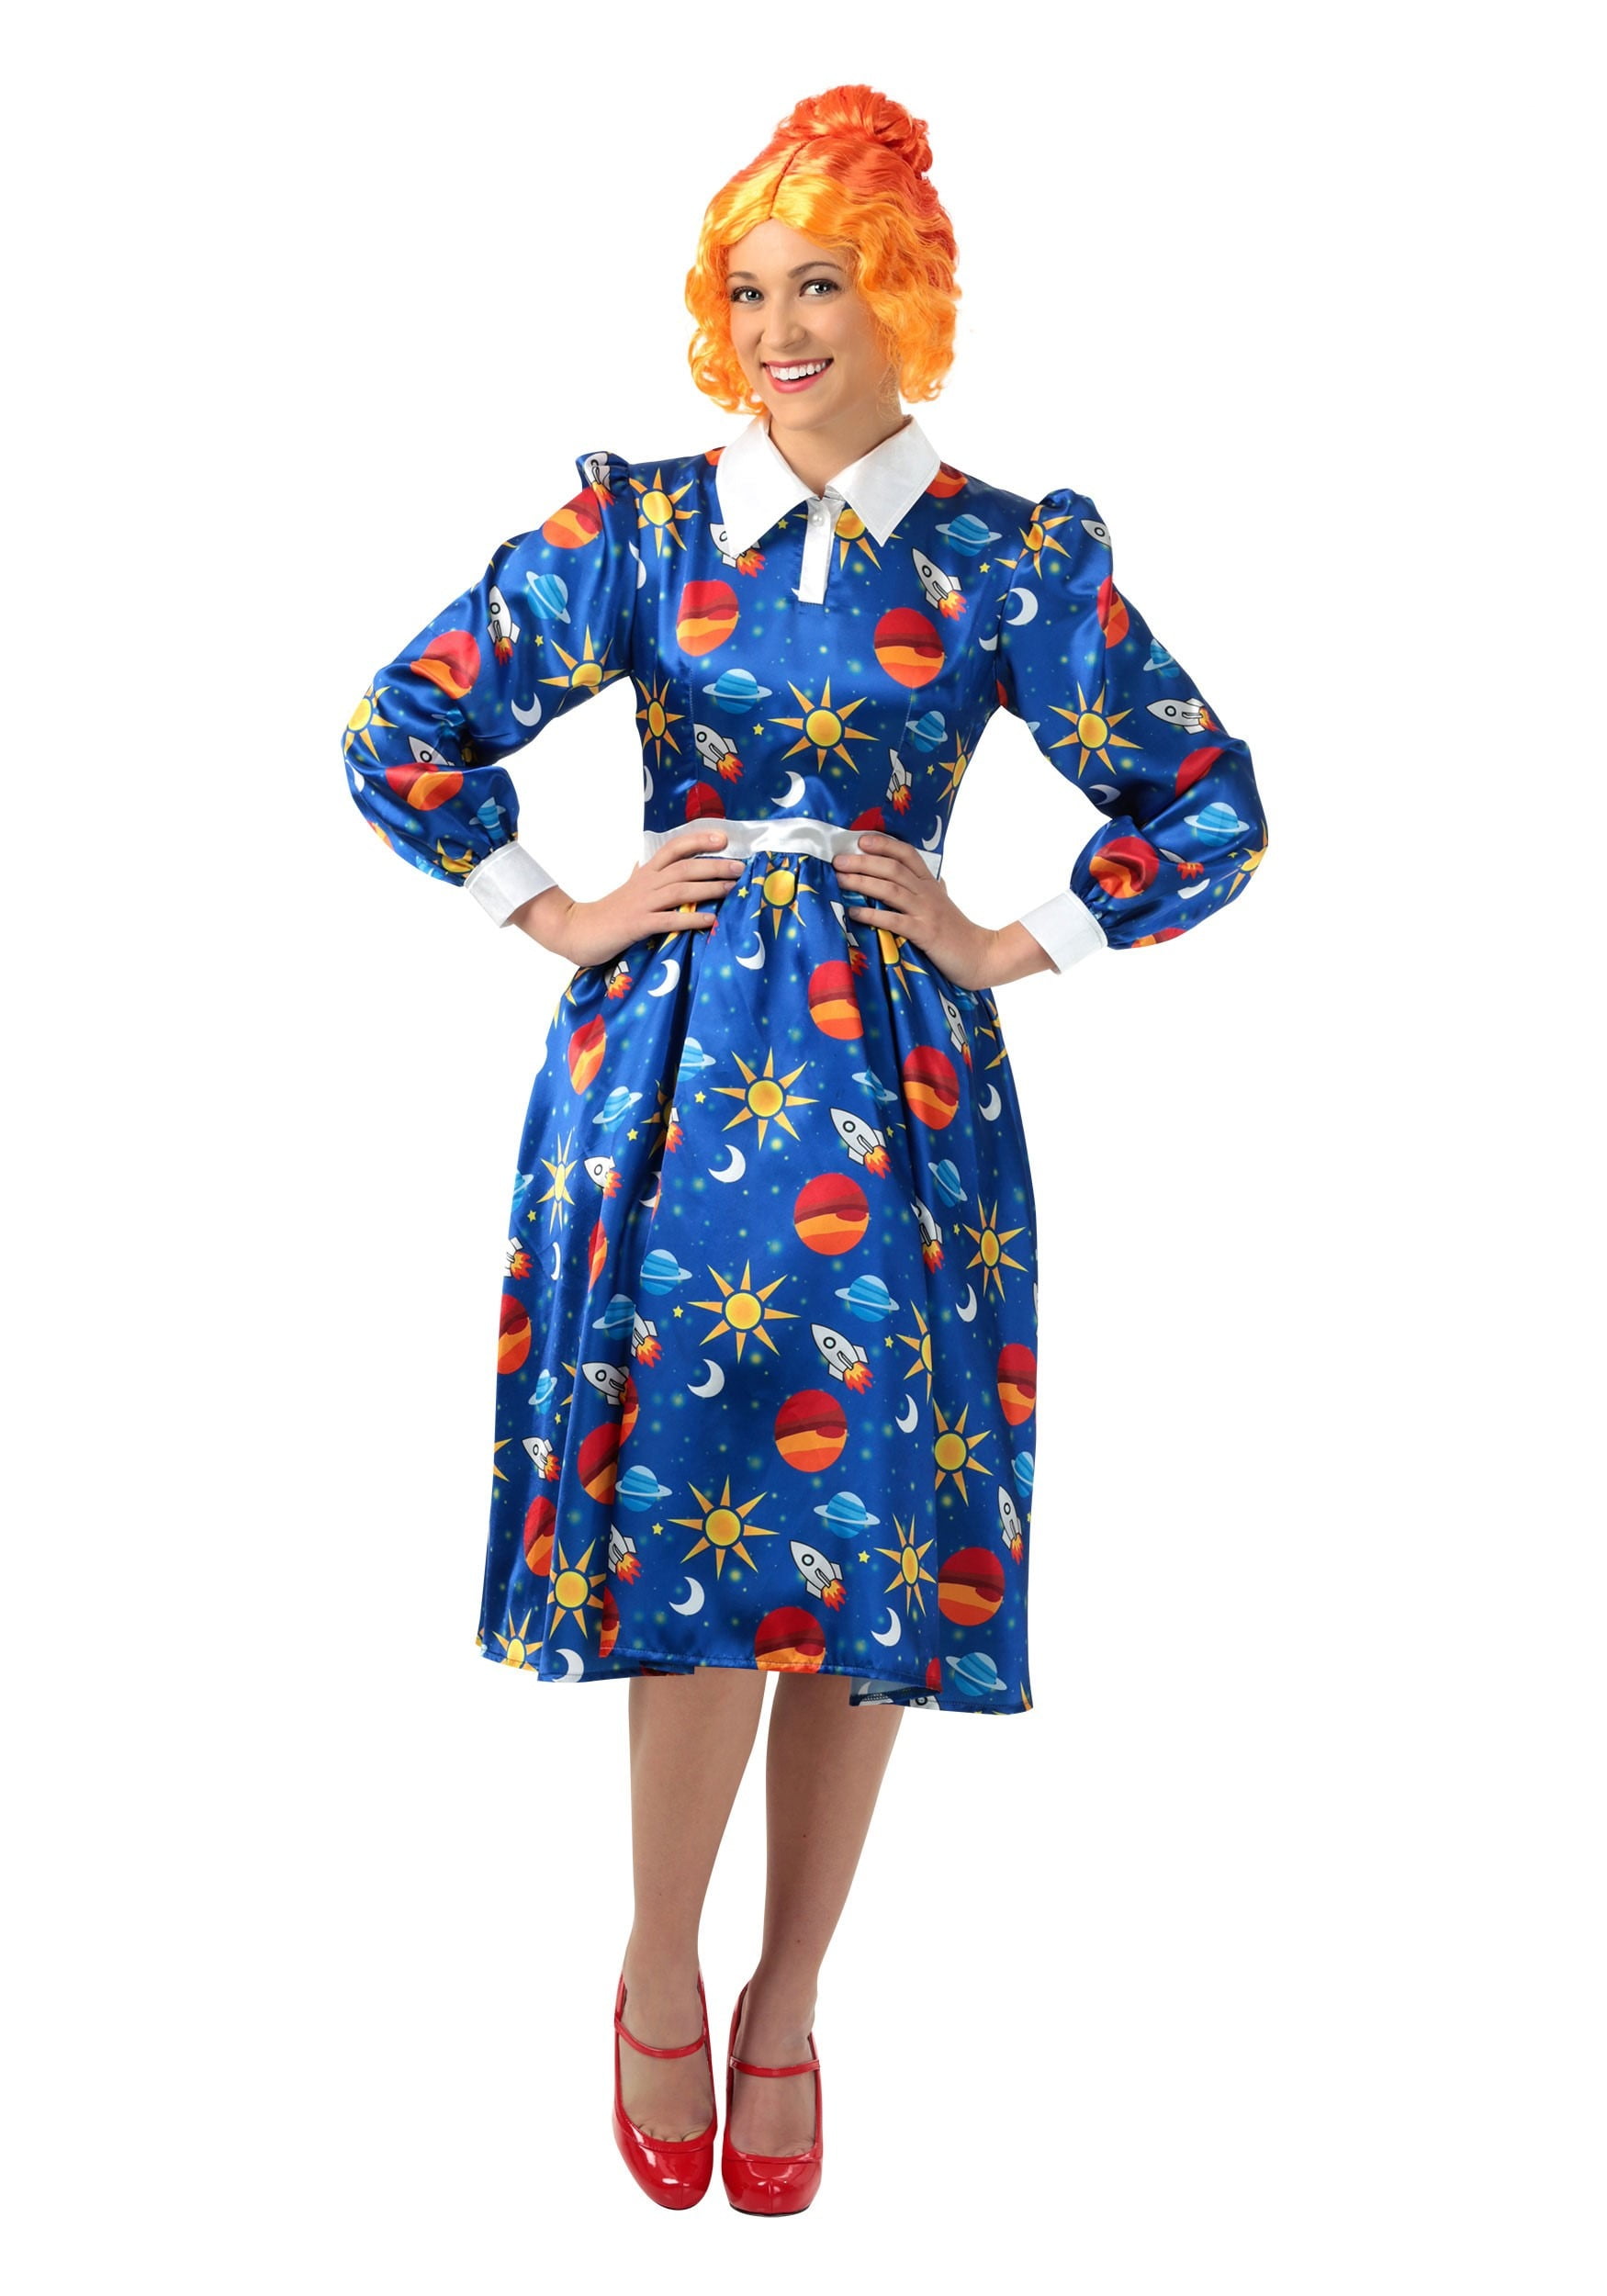 The Magic School Bus Miss Frizzle Costume - Walmart.com.